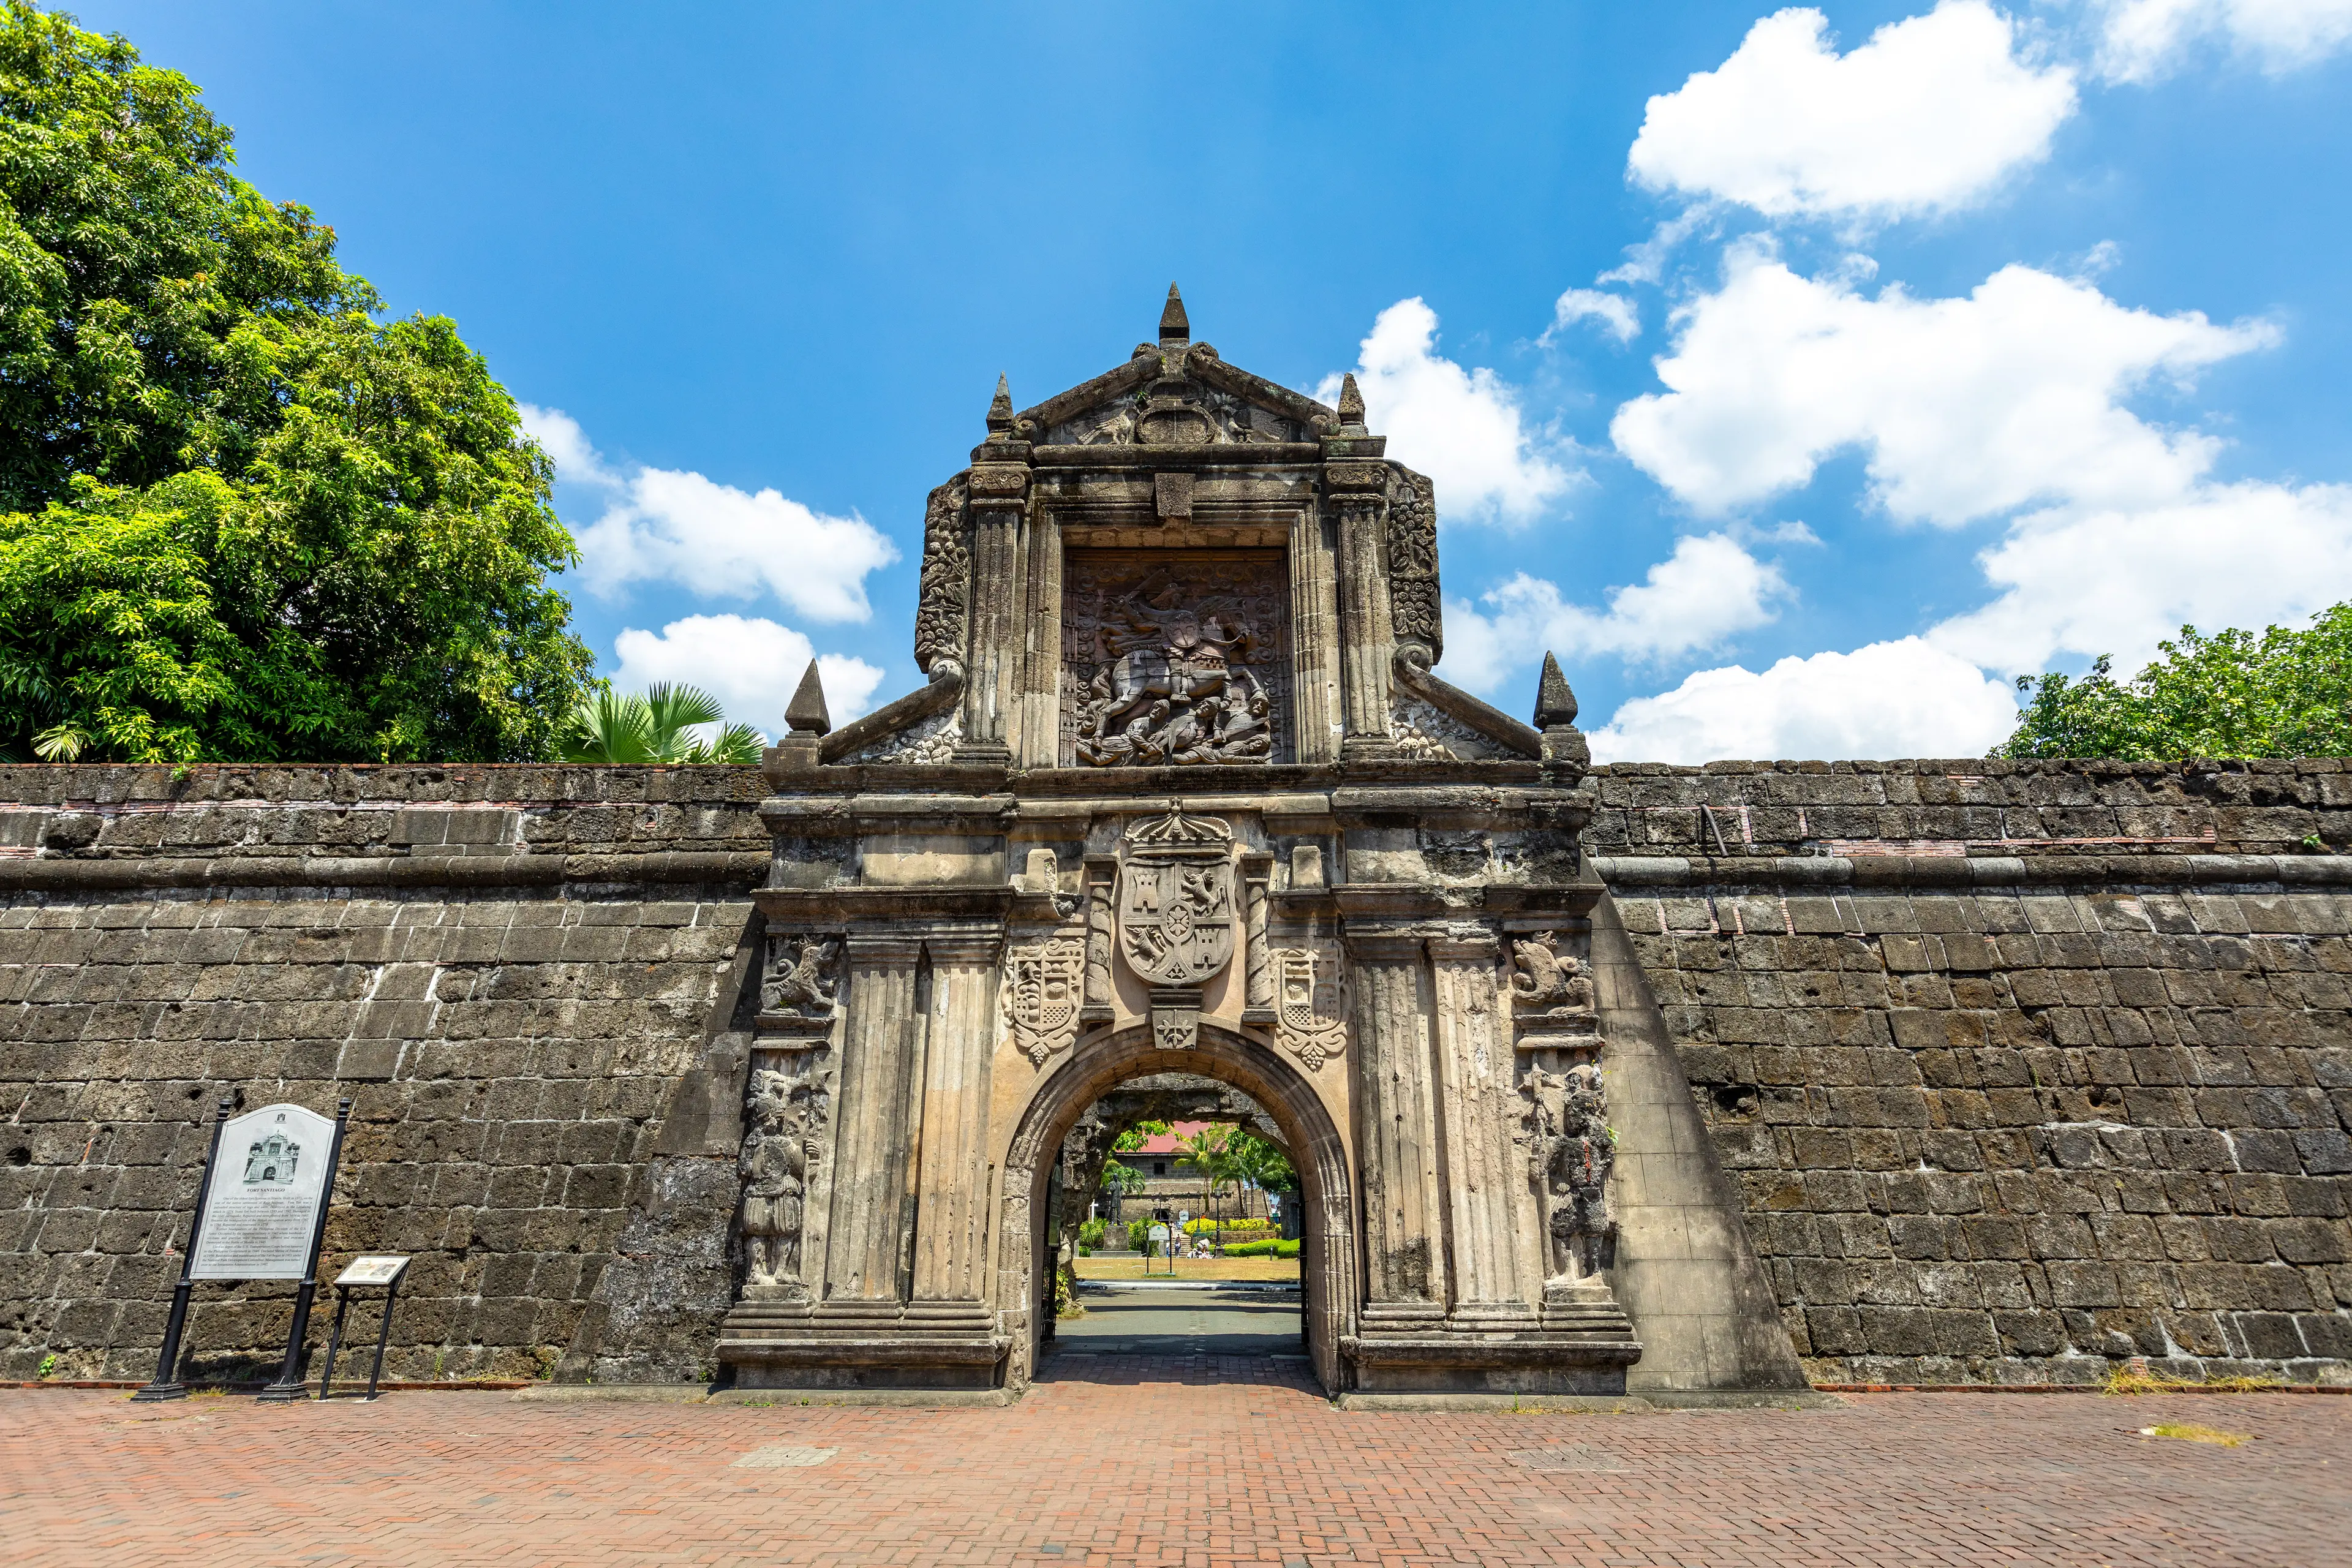 Main gate of Fort Santiago